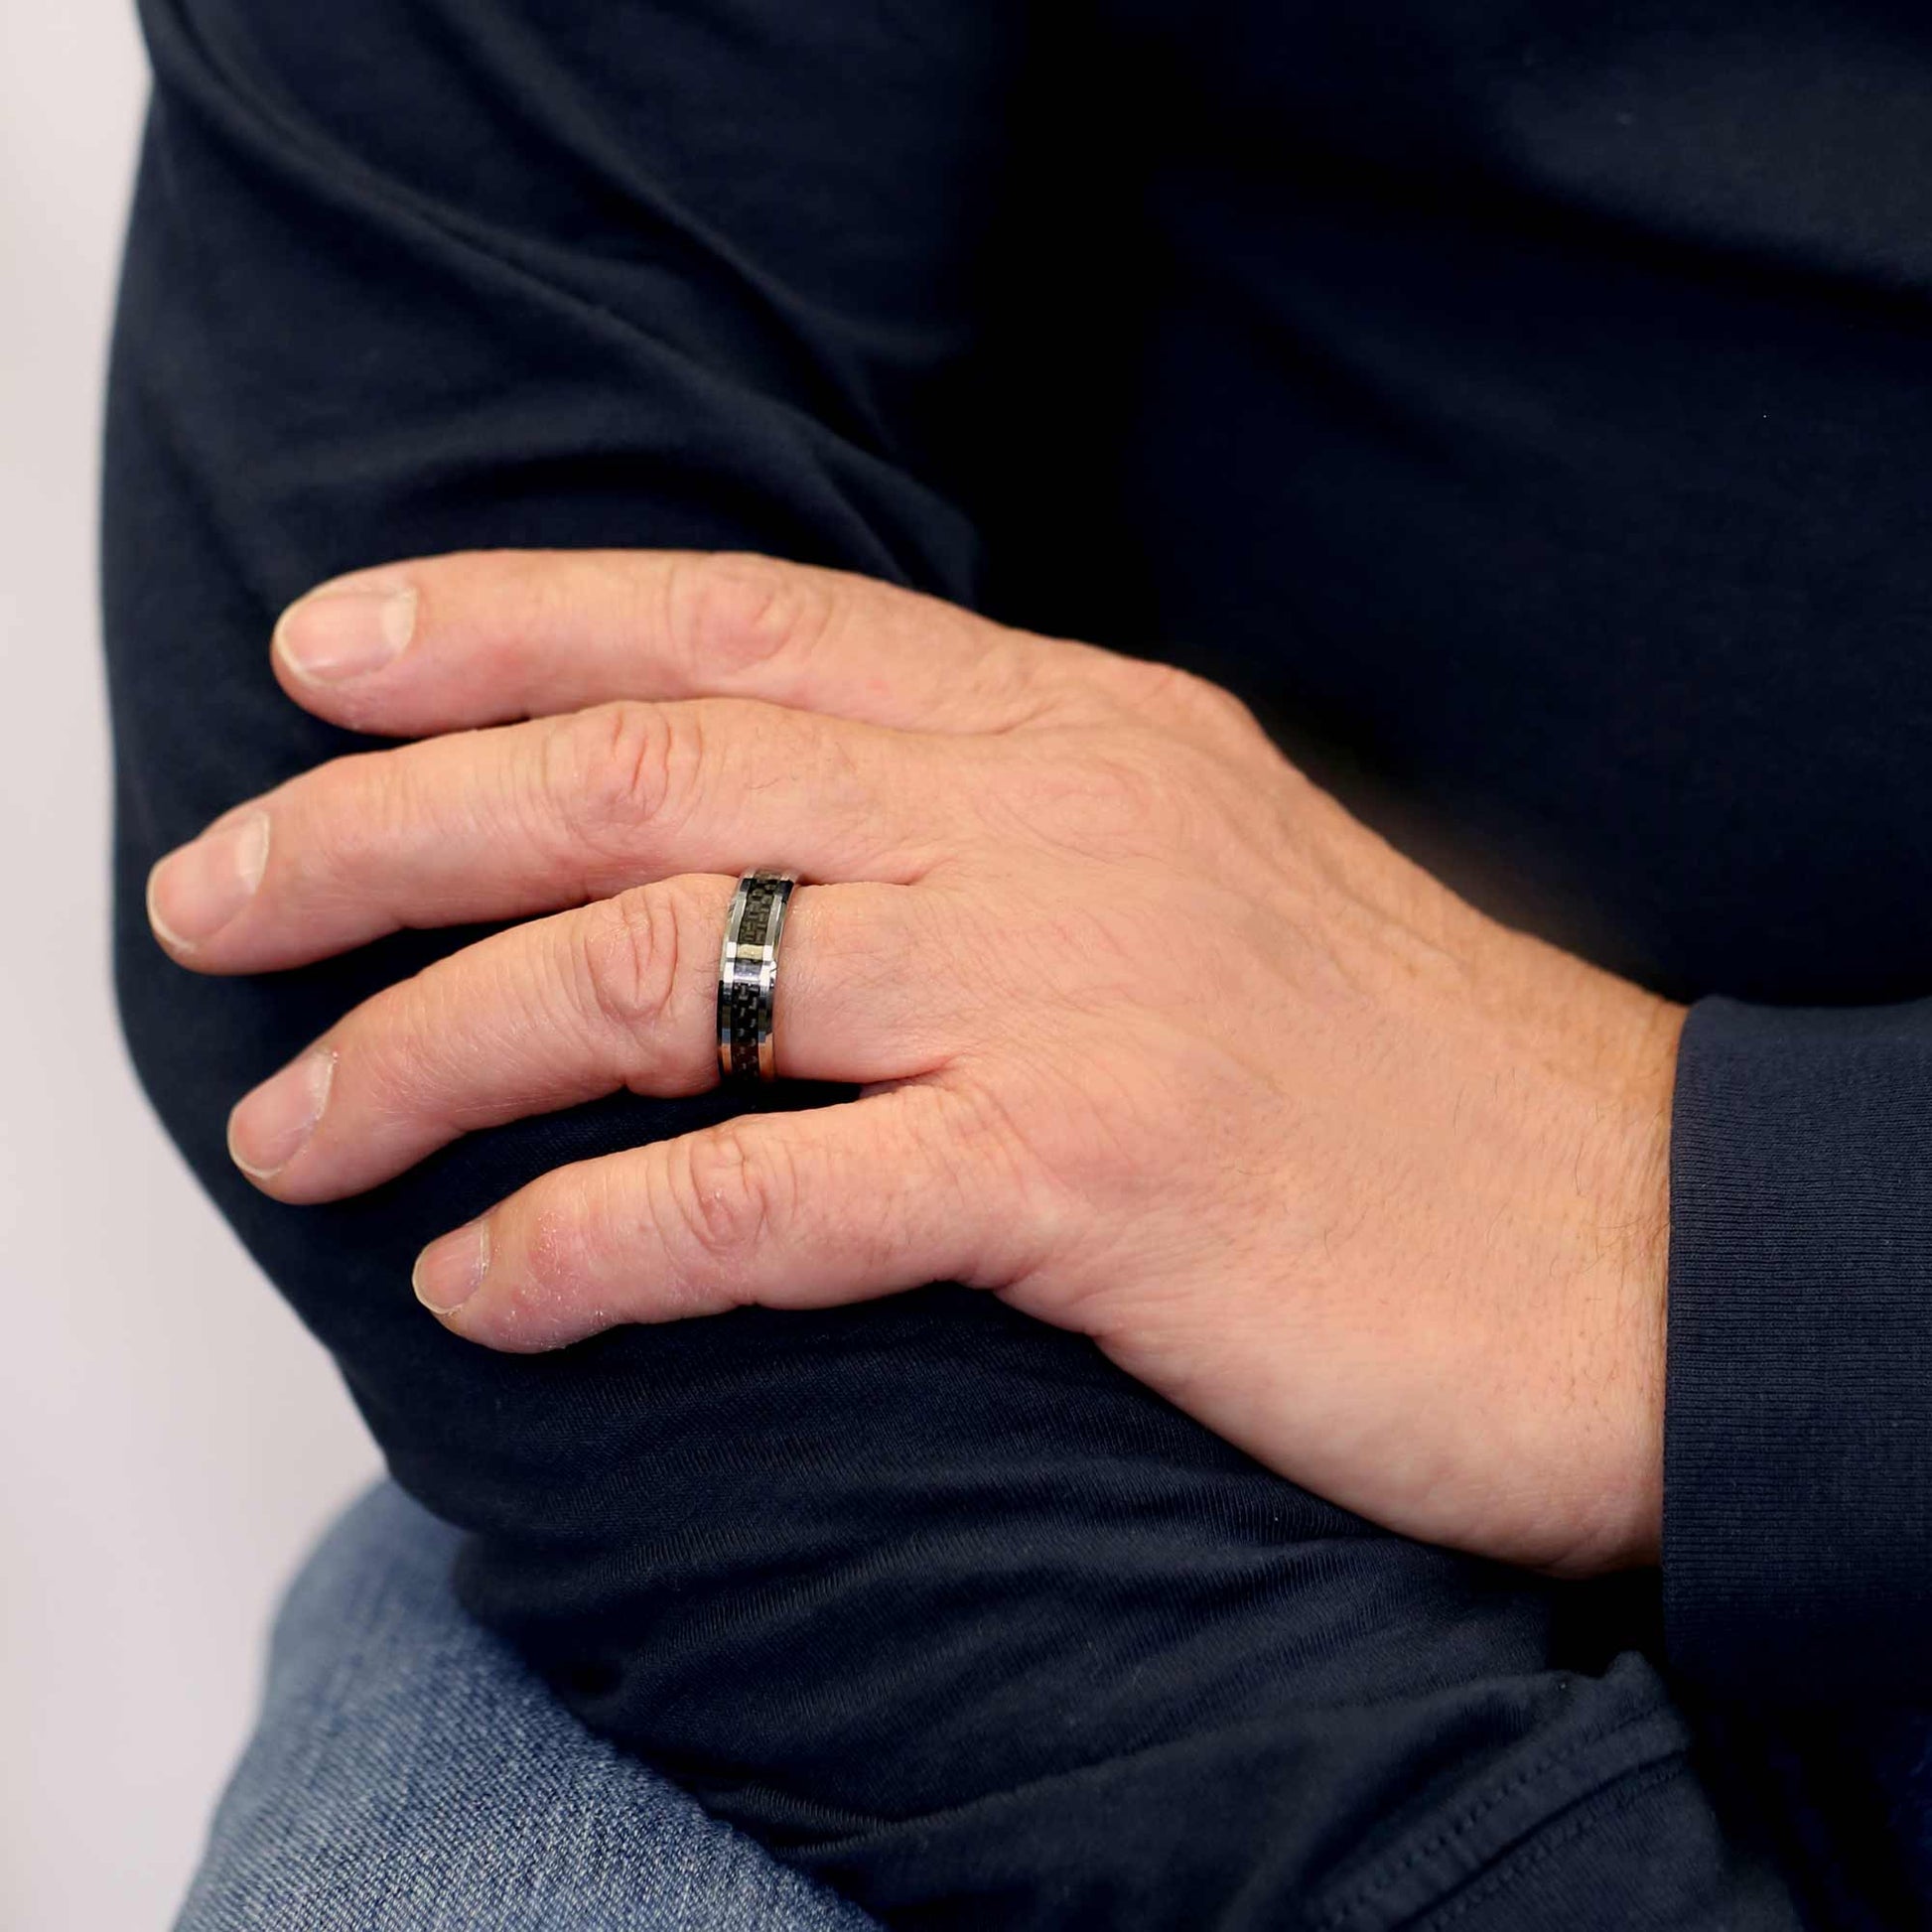 Tungsten Black Carbon Fiber 6mm Wedding Ring